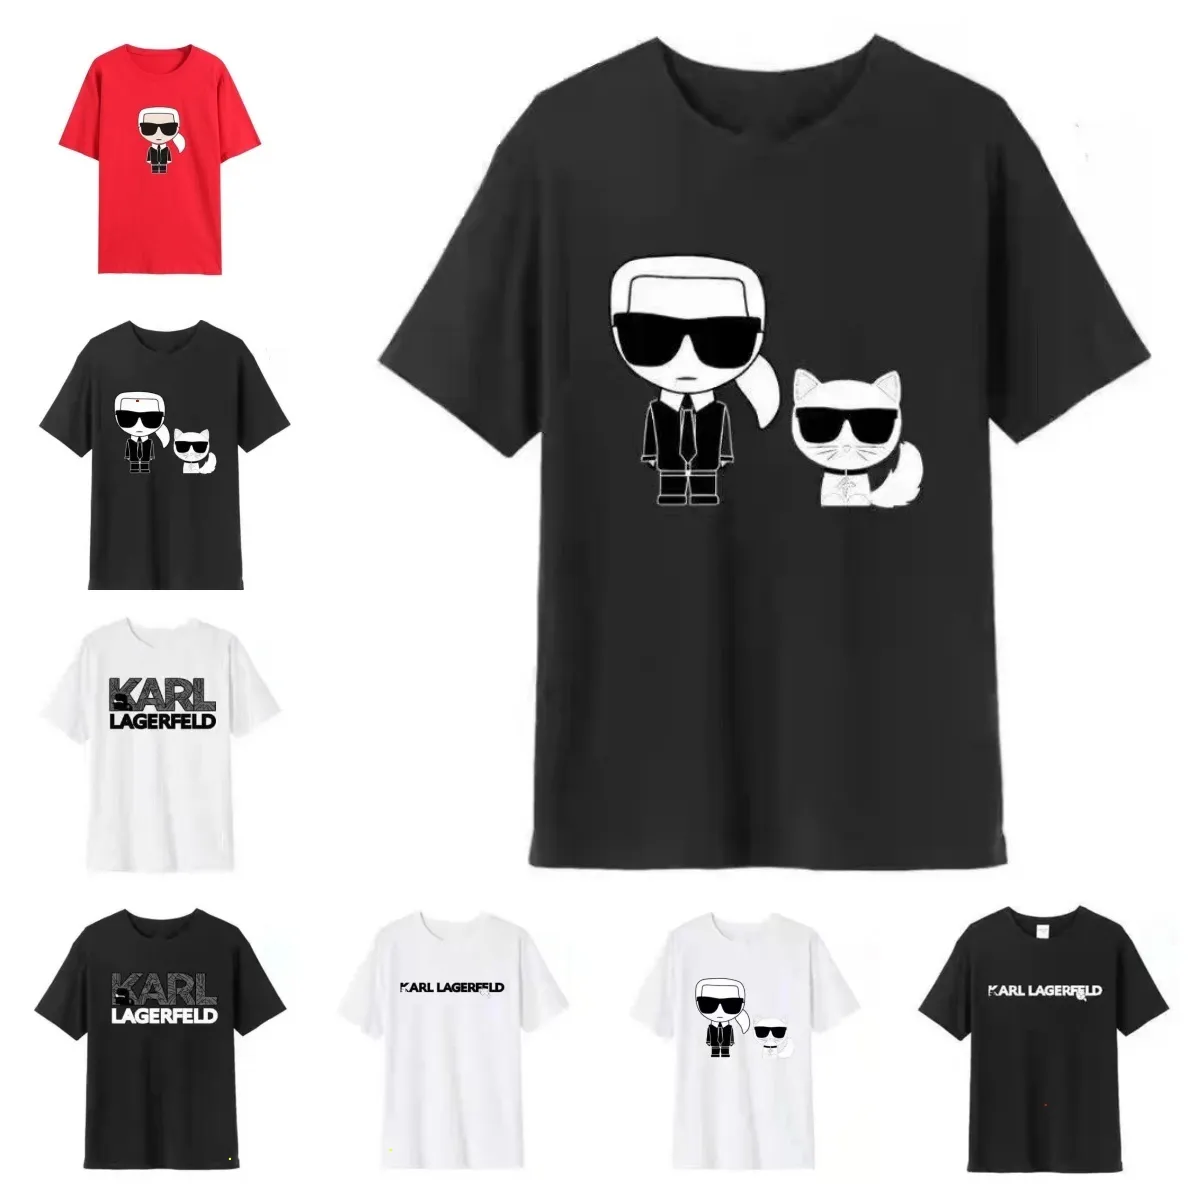 Diseñador Juego casual Camisetas para hombre Diseñador Hombre Camisetas Tops Hombre Camisetas Camisa de verano Letras impresas Hombres Camisetas TAMAÑO asiático S-XXXXXL